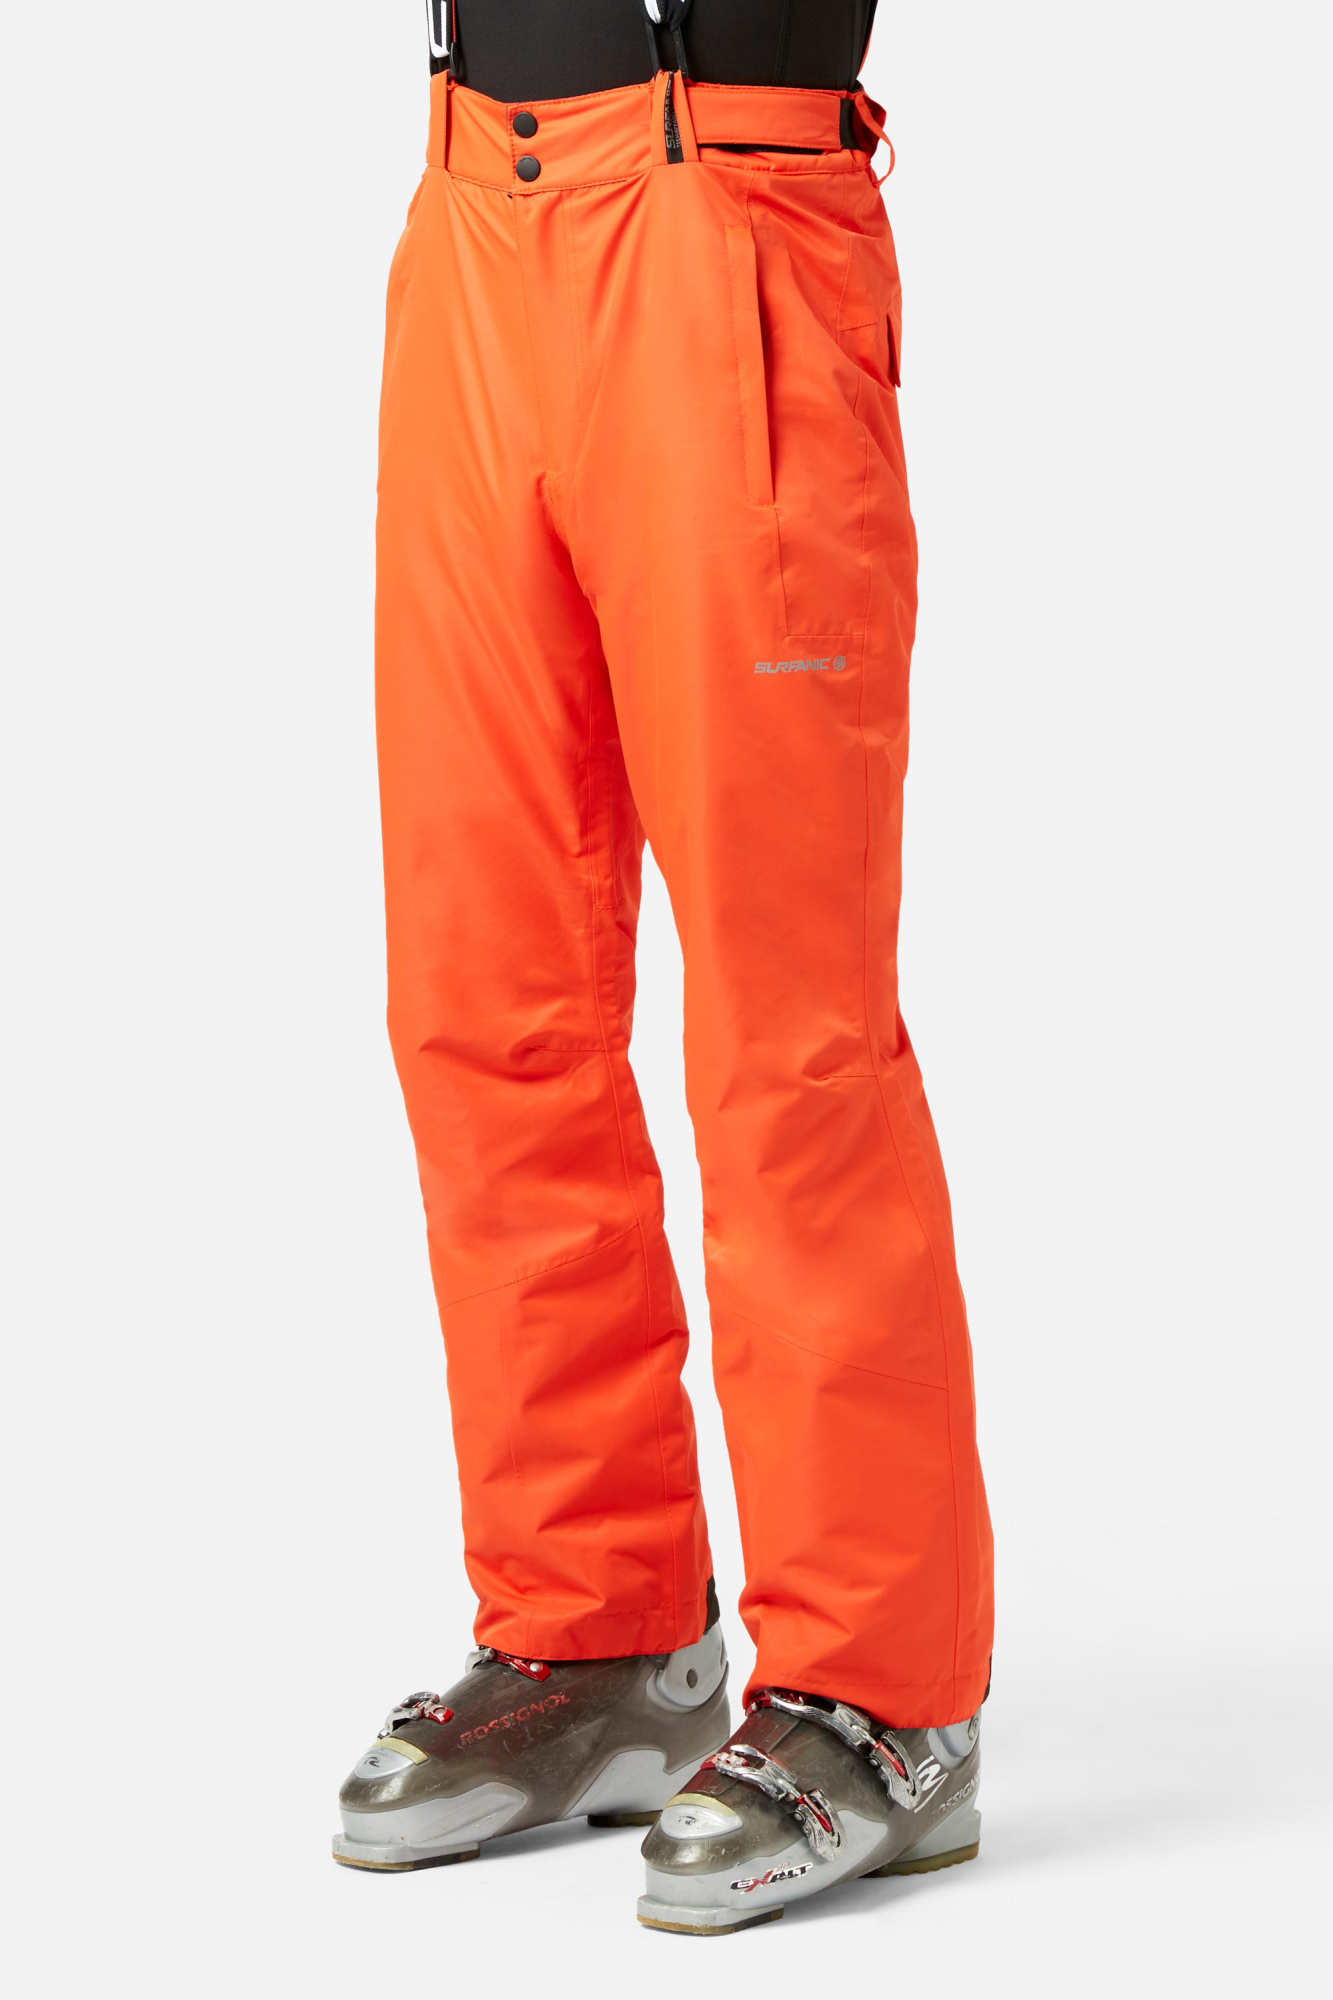 Surfanic Mens Comrade Surftex Pant Orange - Size: XS